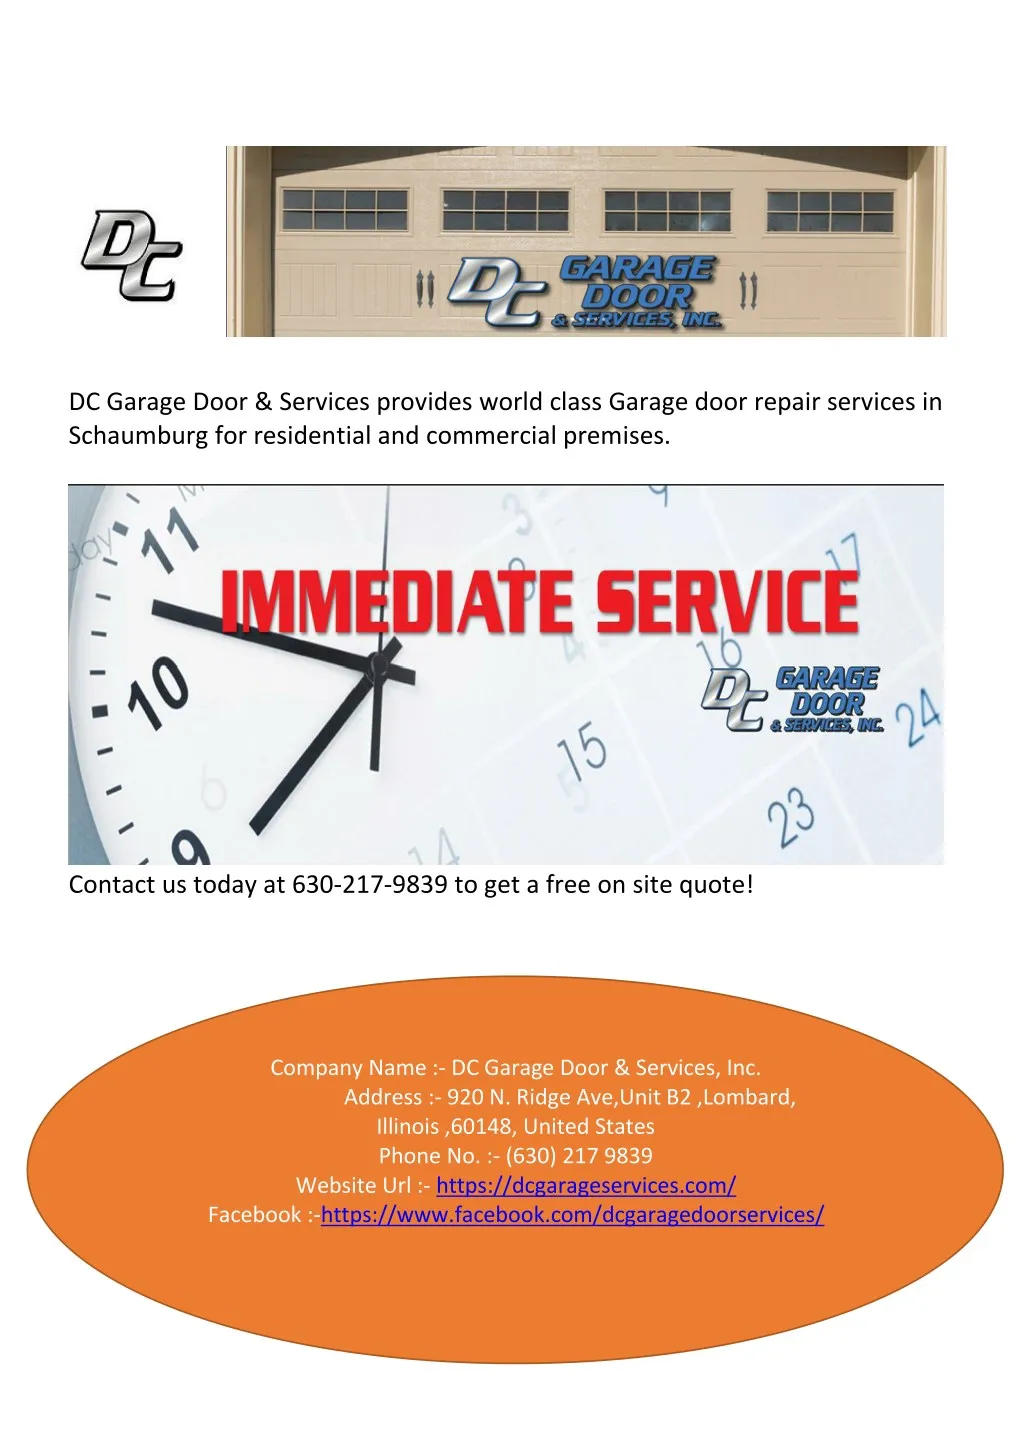 dc garage door services provides world class